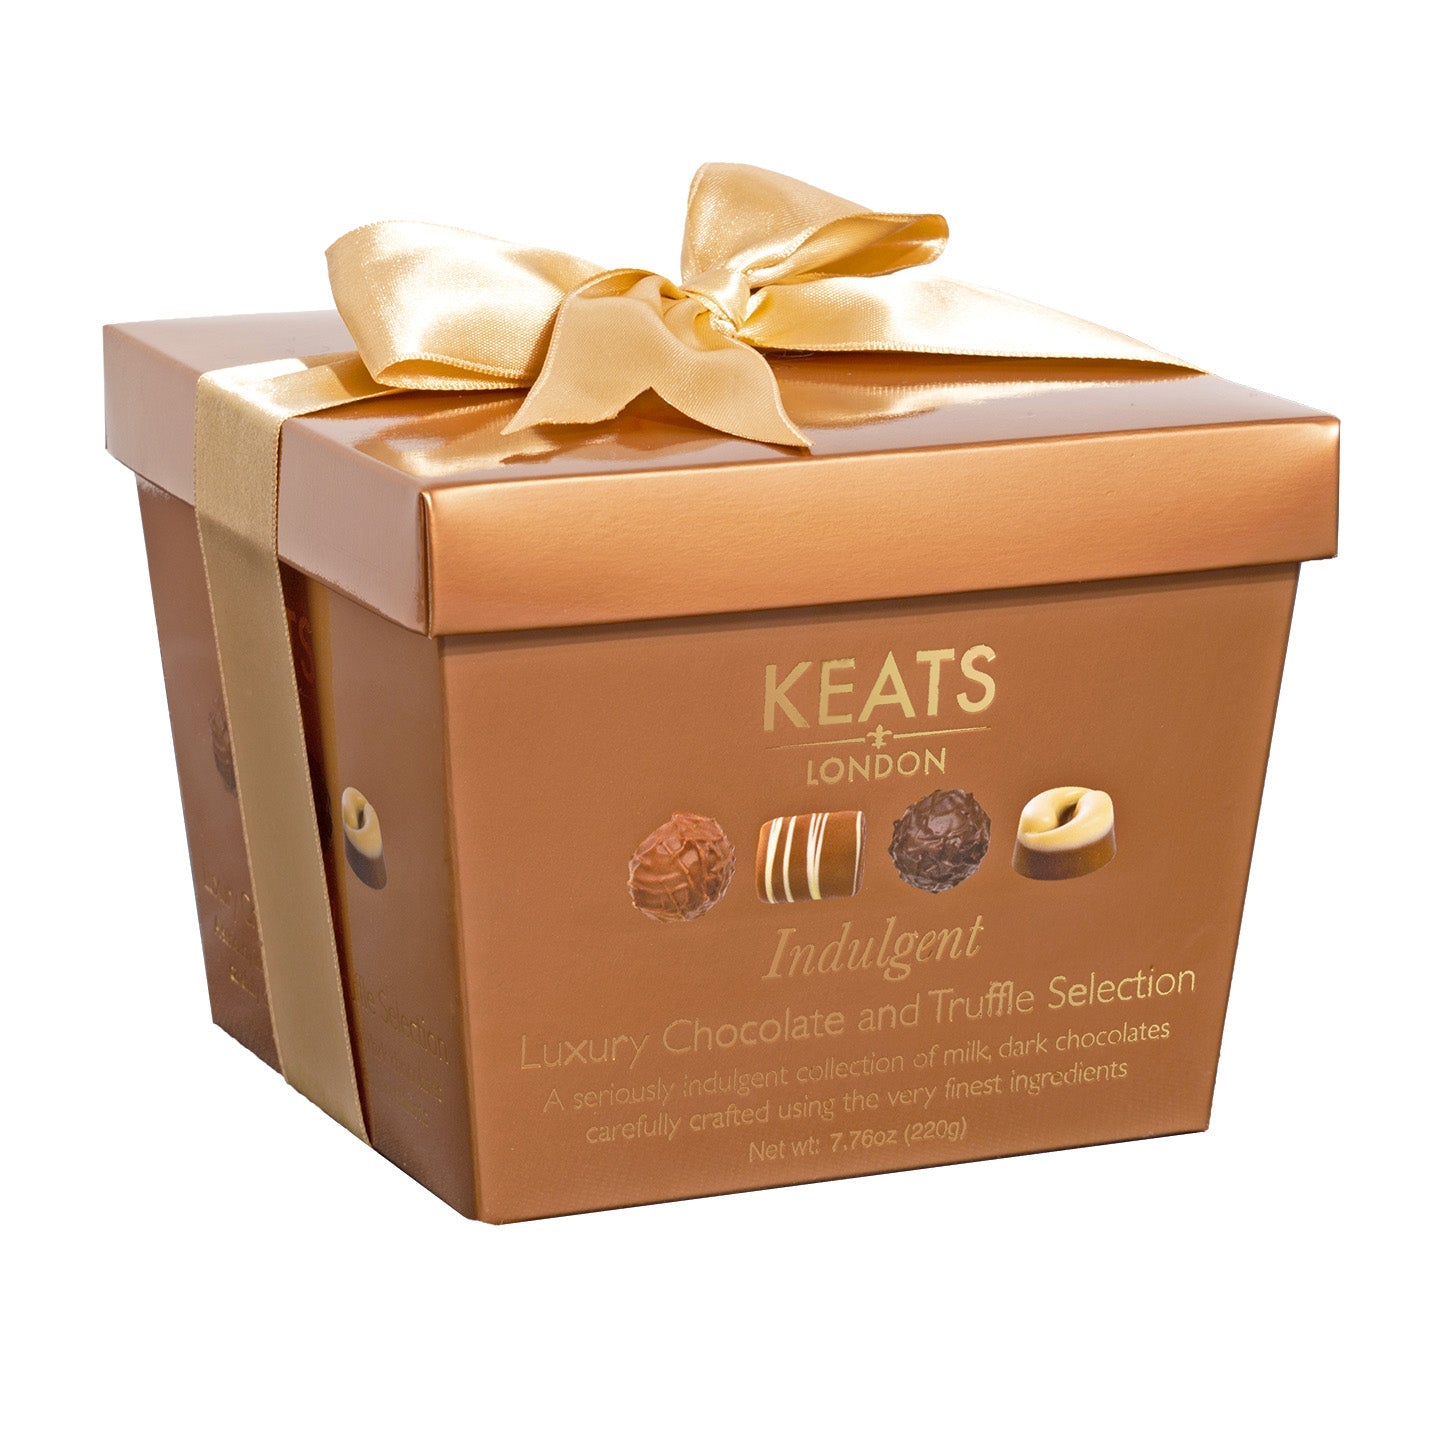 Keats Indulgent Luxury Chocolate & Truffle Selection (220g) by Keats - The Pop Up Deli